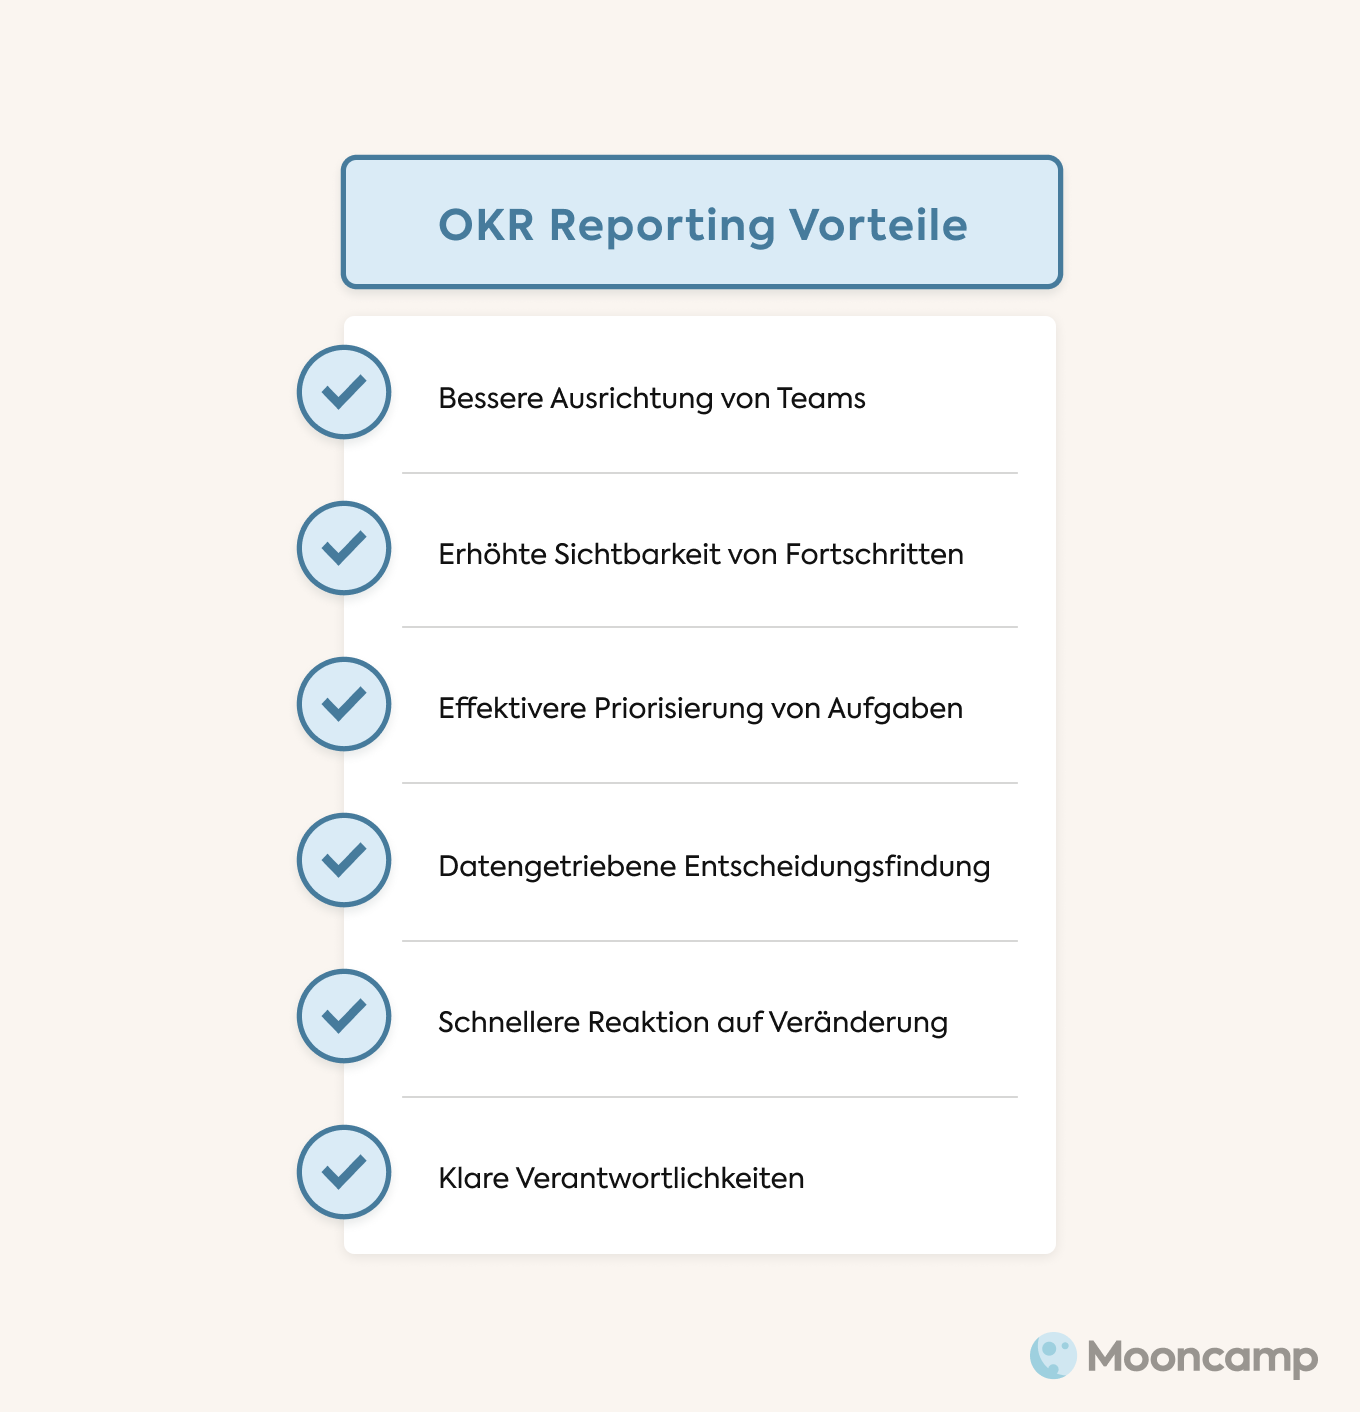 OKR Reporting Vorteile